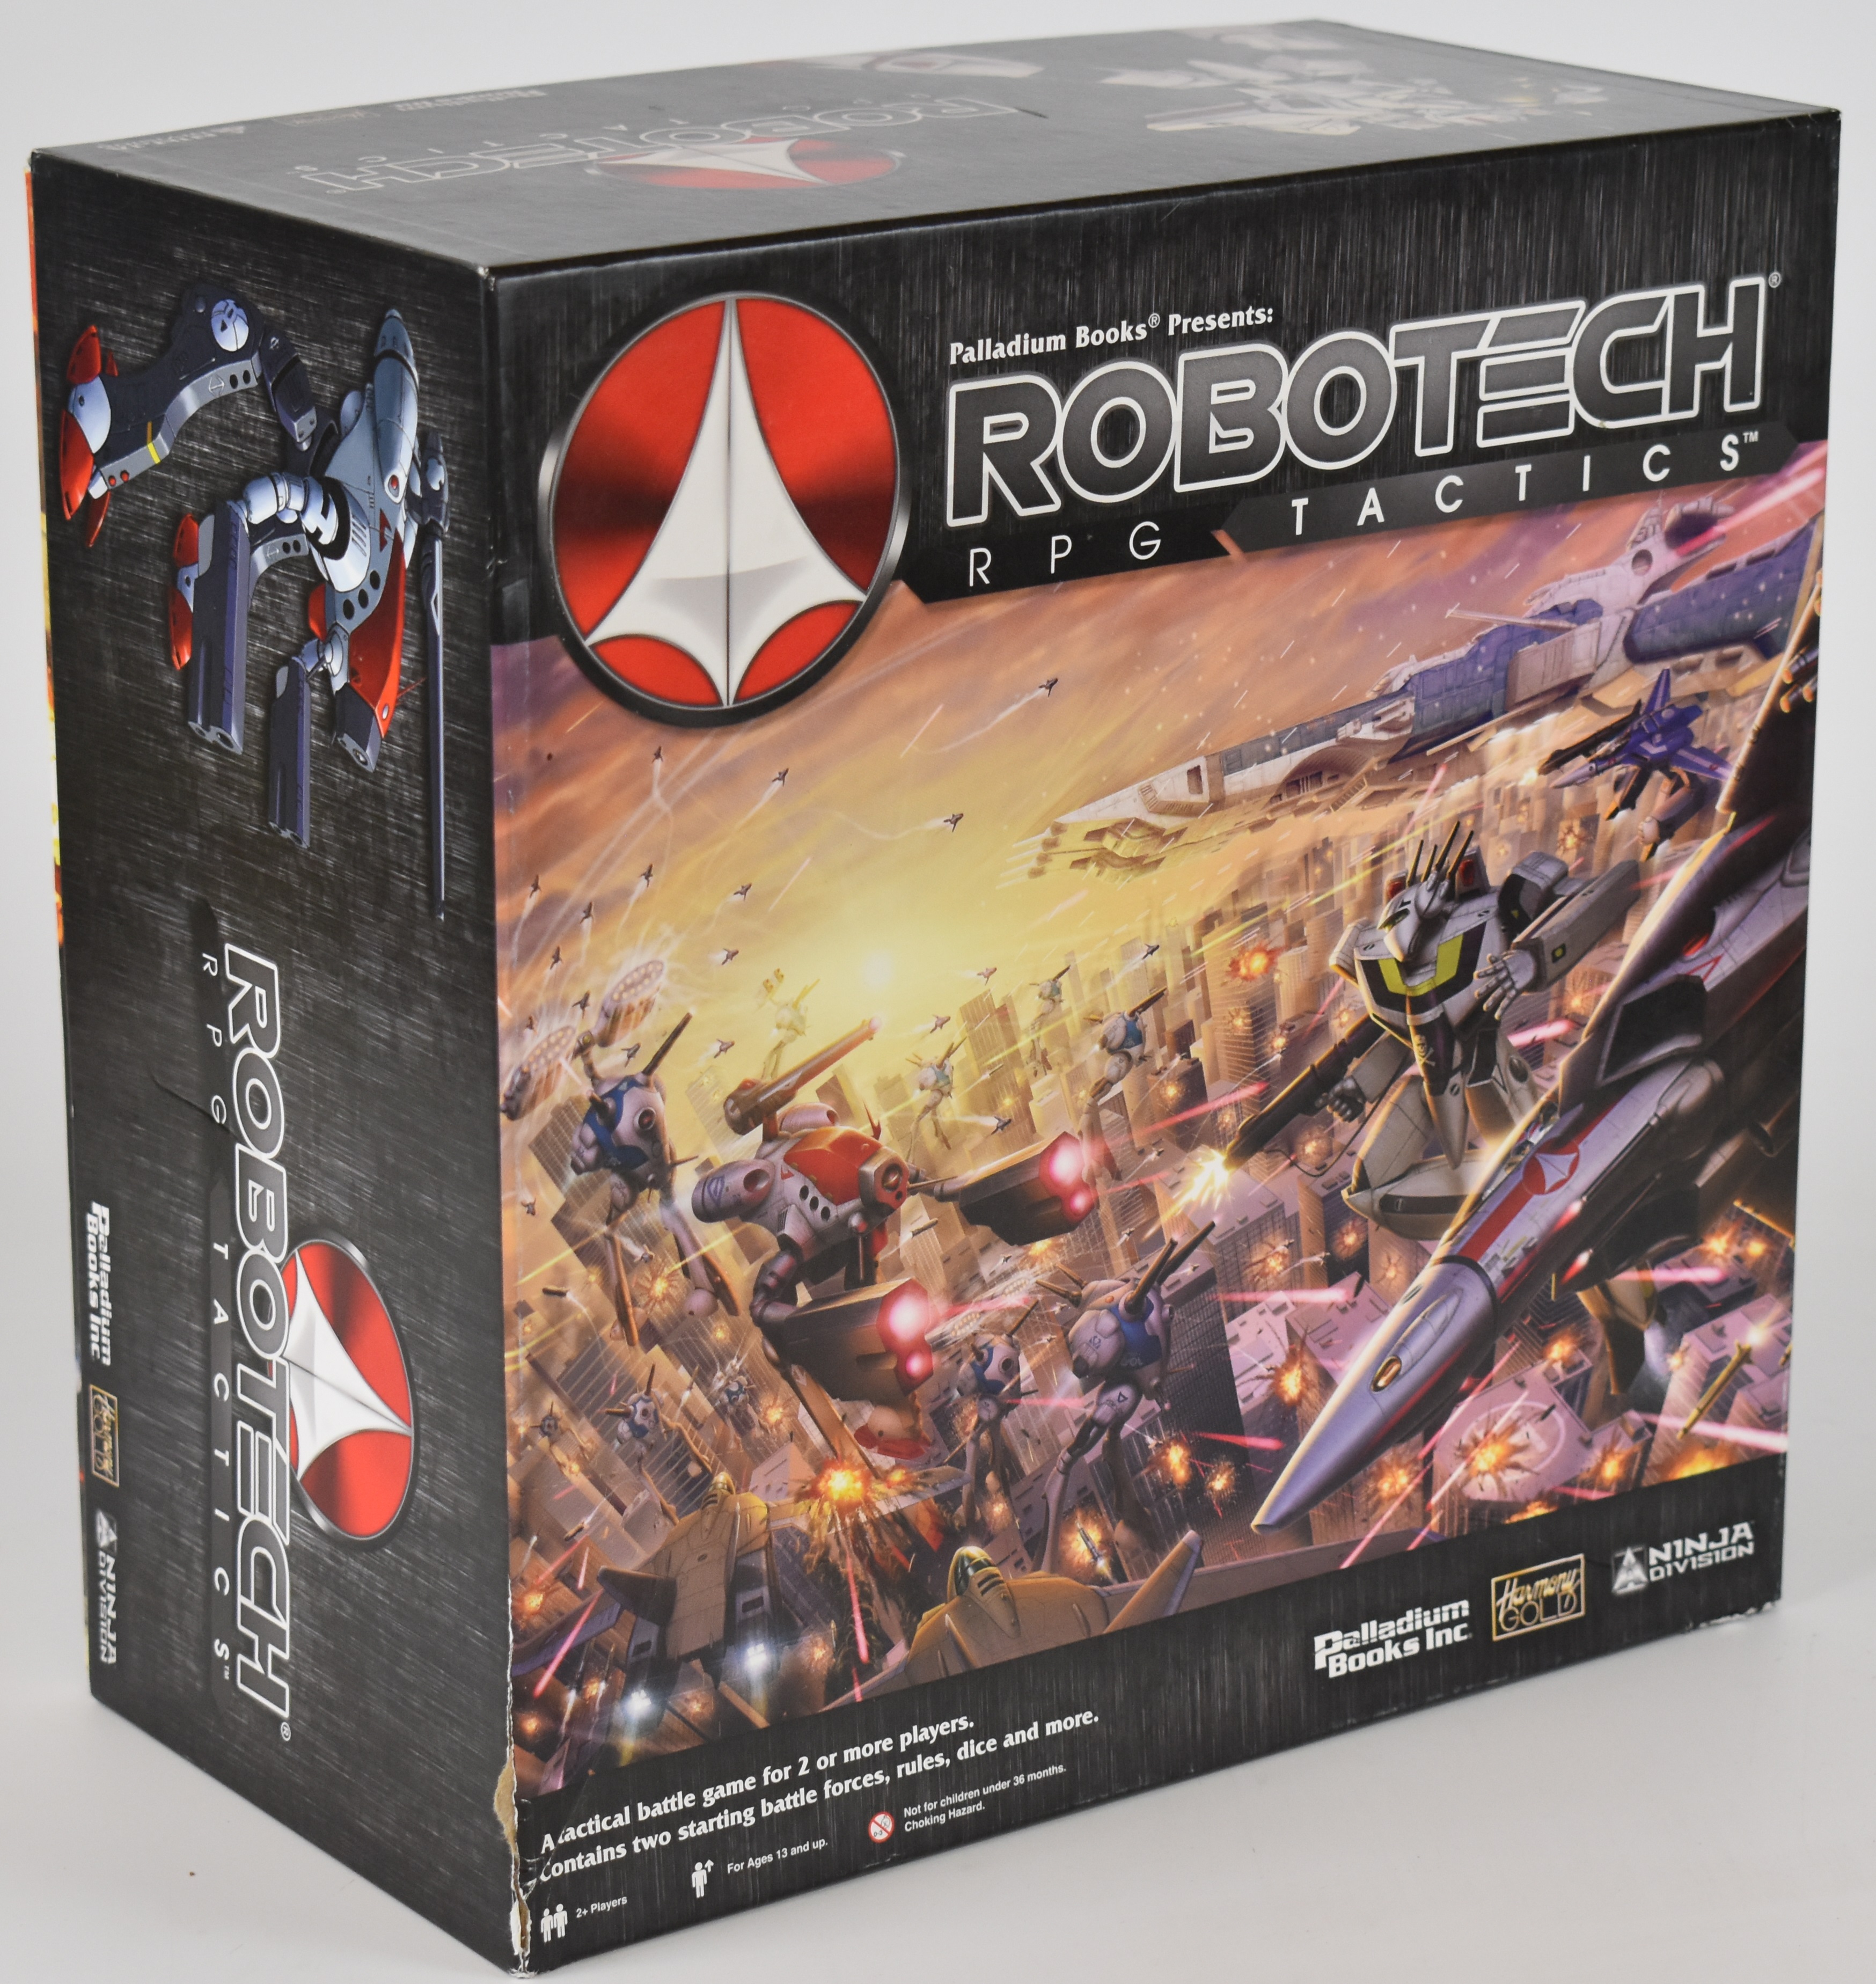 Palladium Books Robotech RPG Tactics table top battle game, unused in original box with